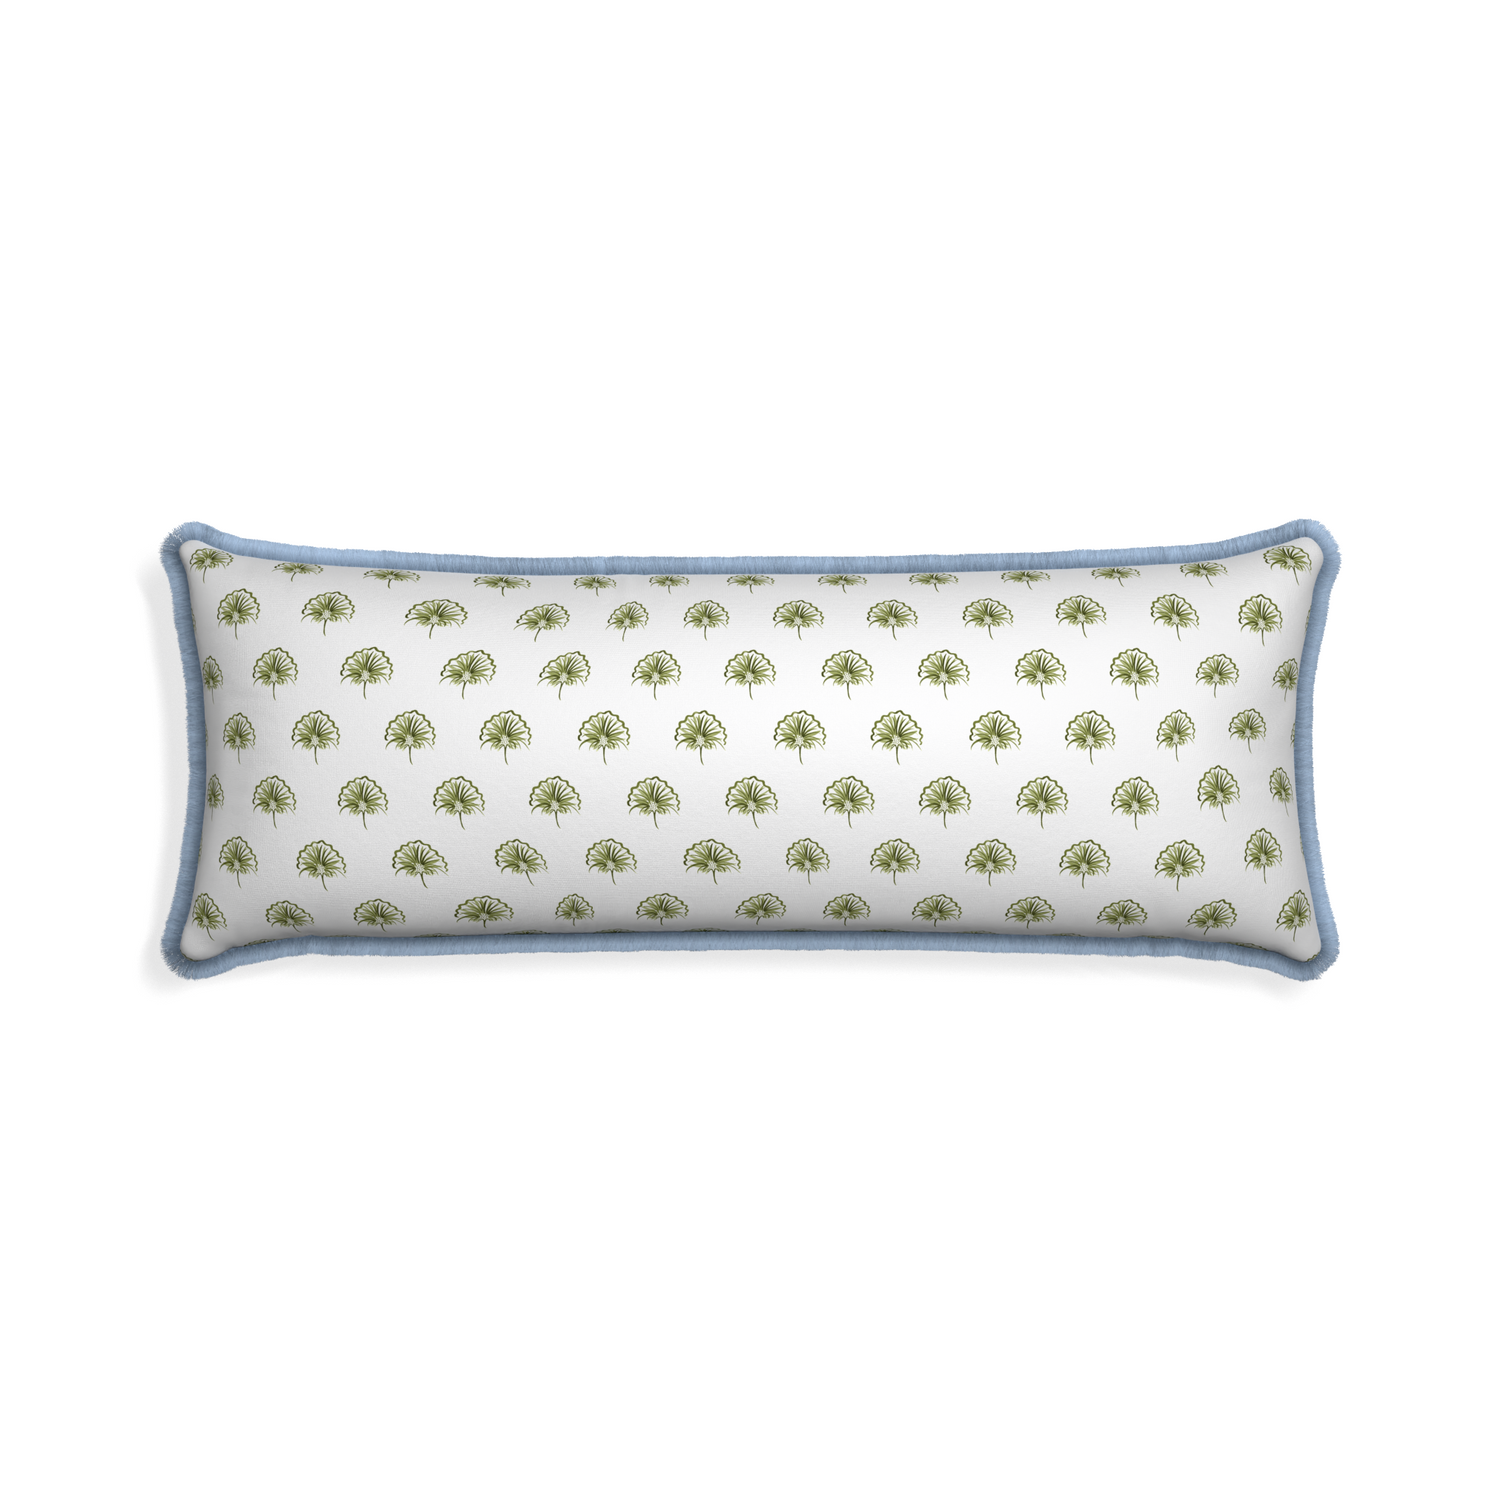 Xl-lumbar penelope moss custom pillow with sky fringe on white background